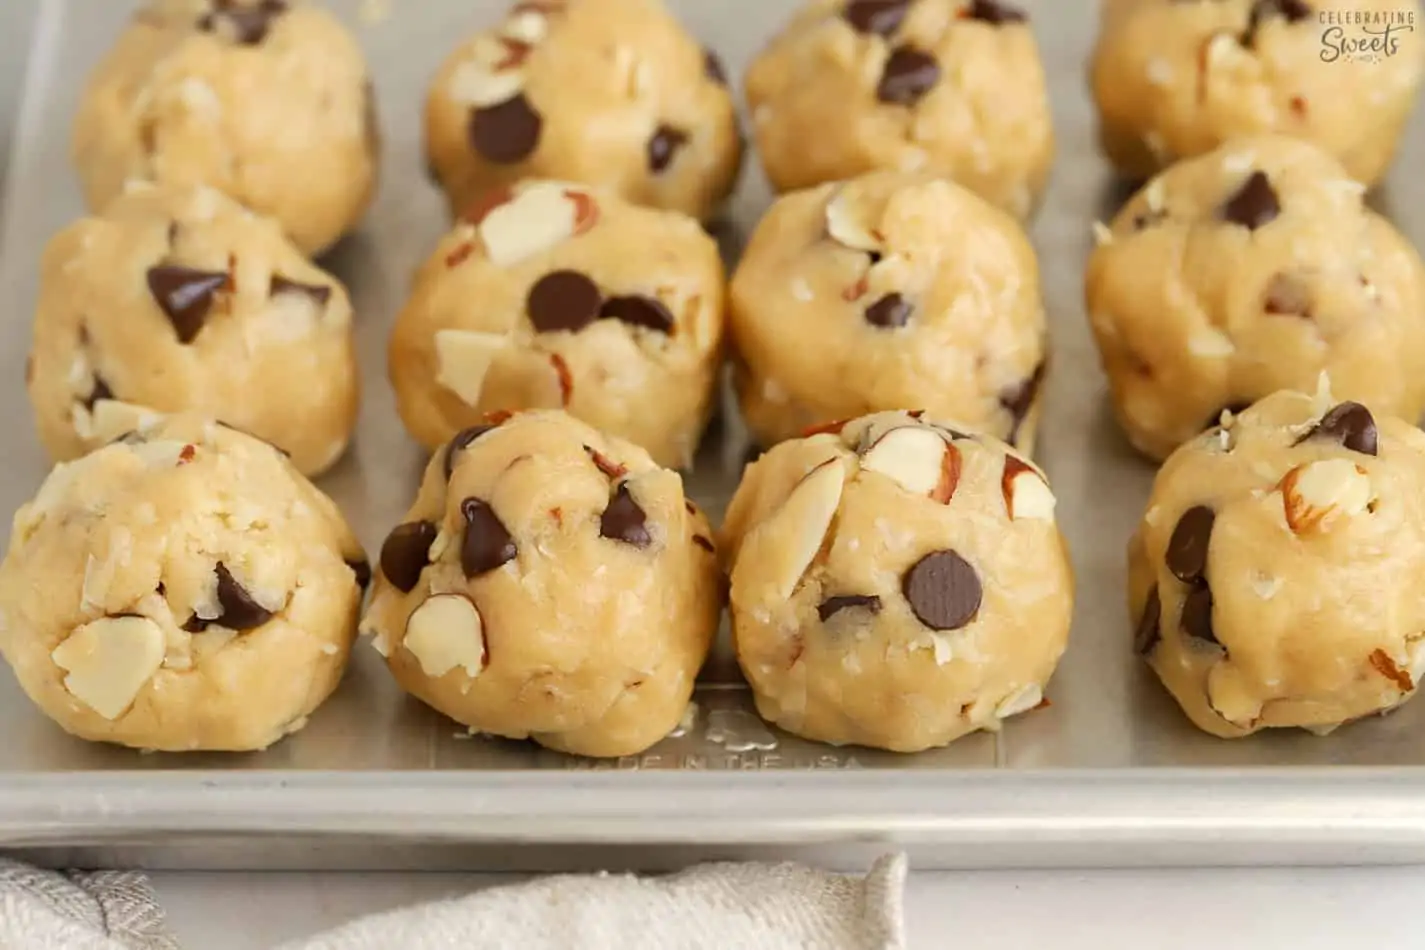 Almond joy cookie dough balls on a baking sheet.